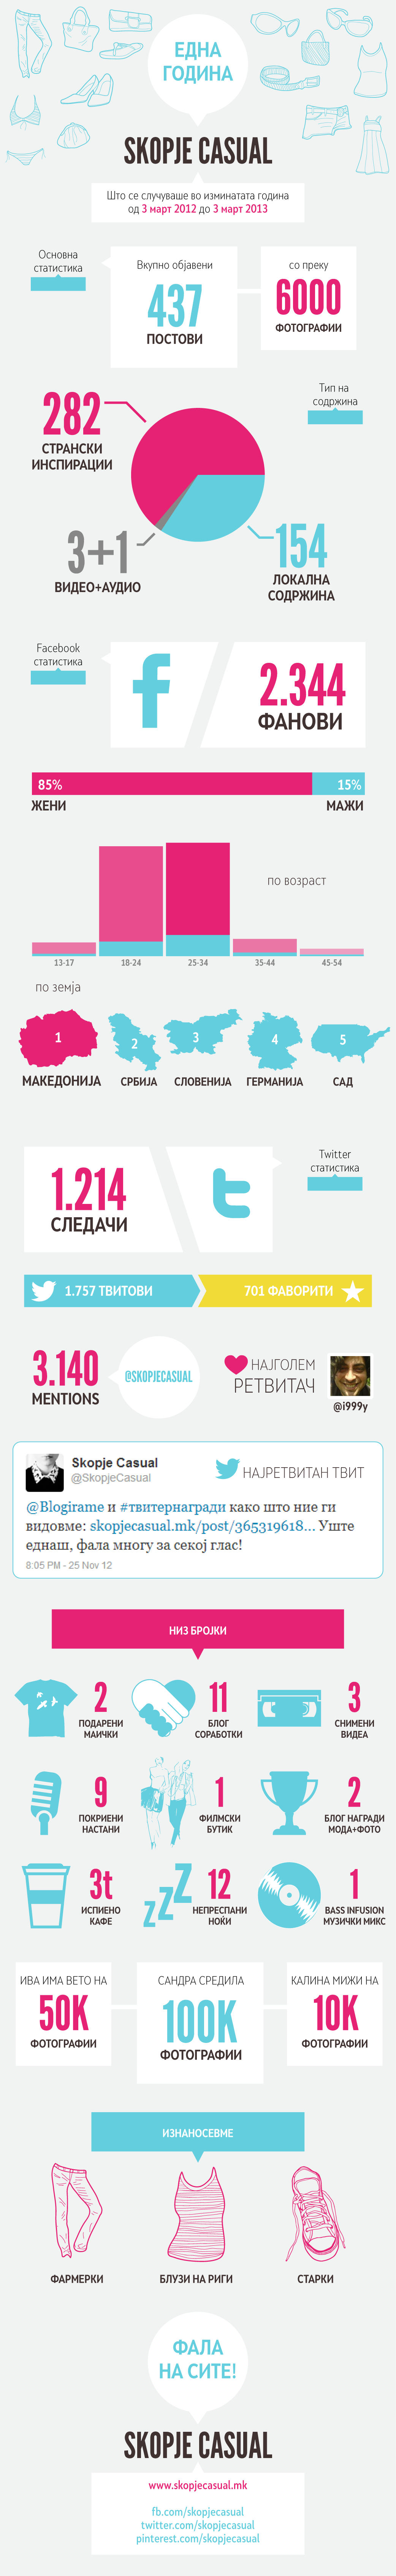 Skopje Casual Infographic 2012